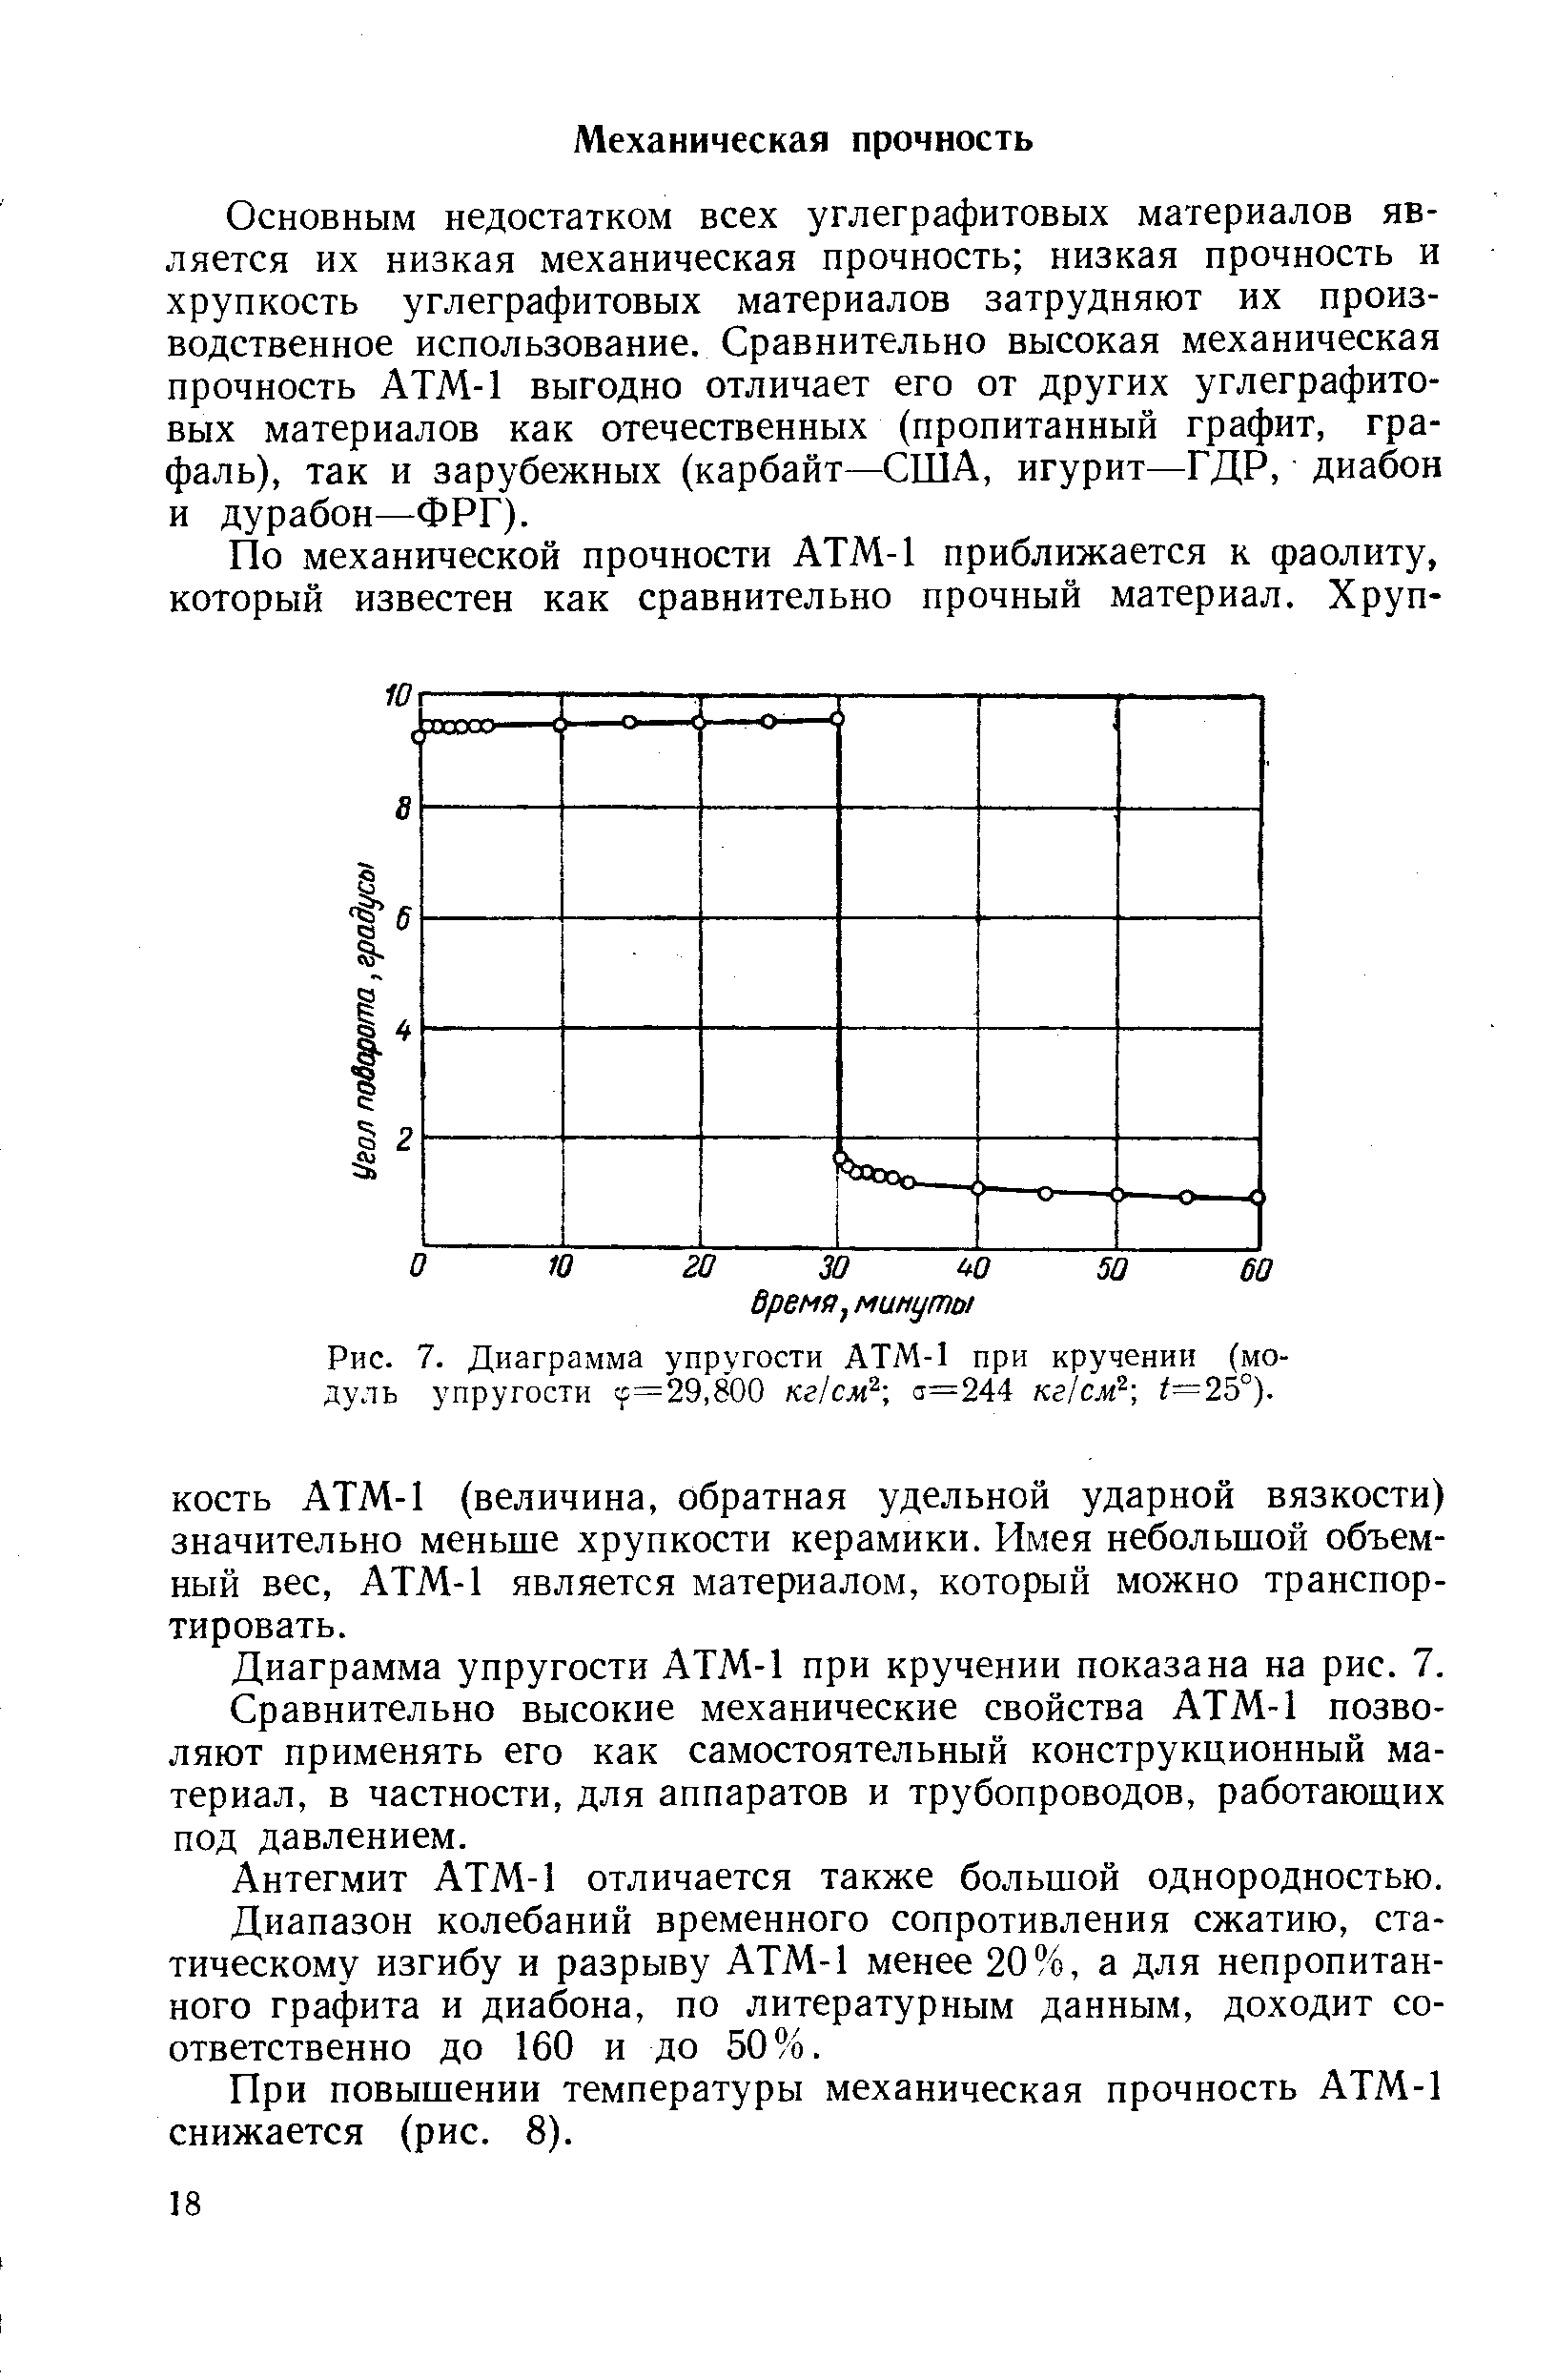 Диаграмма упругости АТМ-1 при кручении показана на рис. 7.